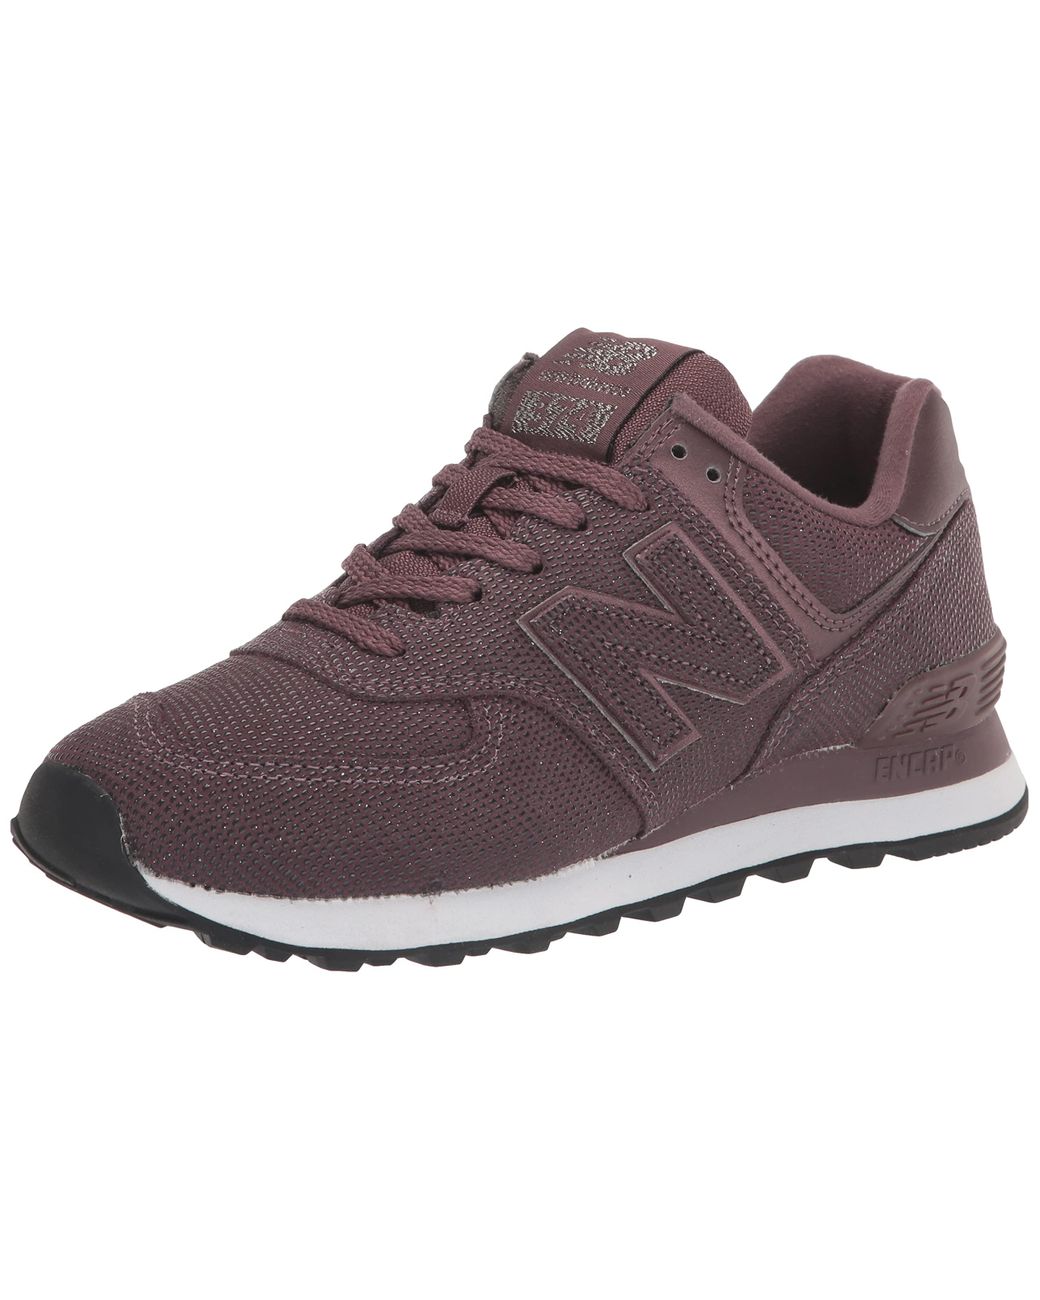 New Balance 574 V2 Embellished Sneaker in Brown | Lyst